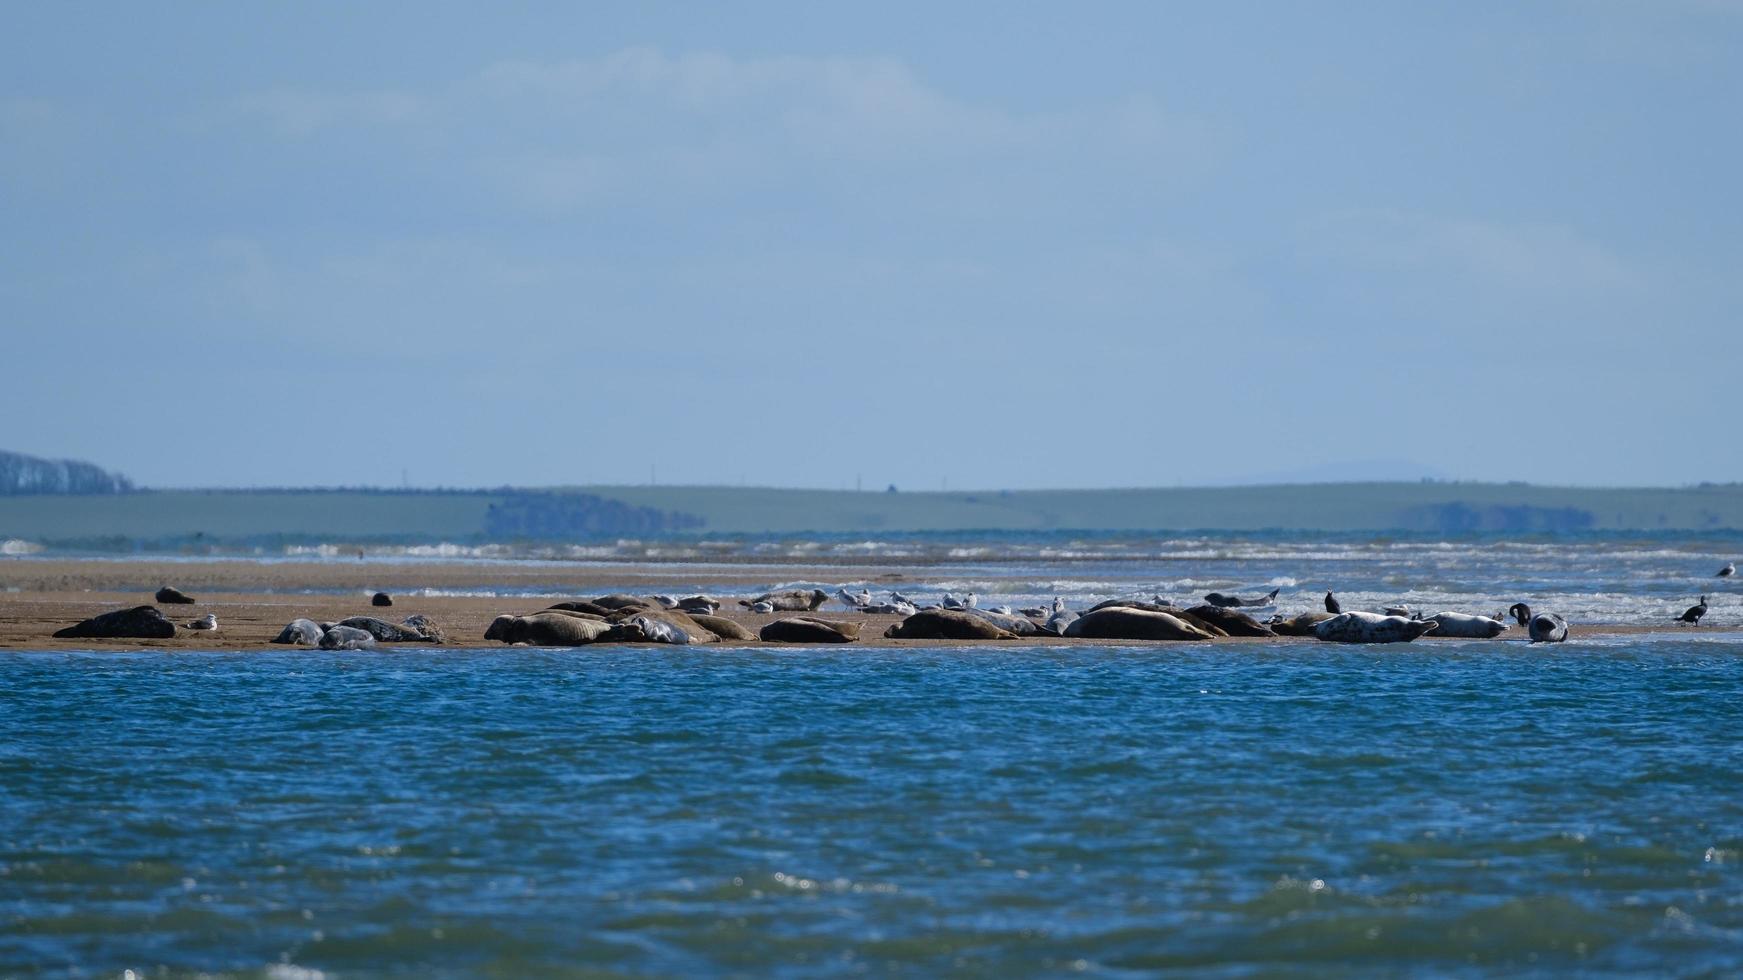 foca cinzenta halichoerus grypus marlough beach irlanda do norte reino unido foto